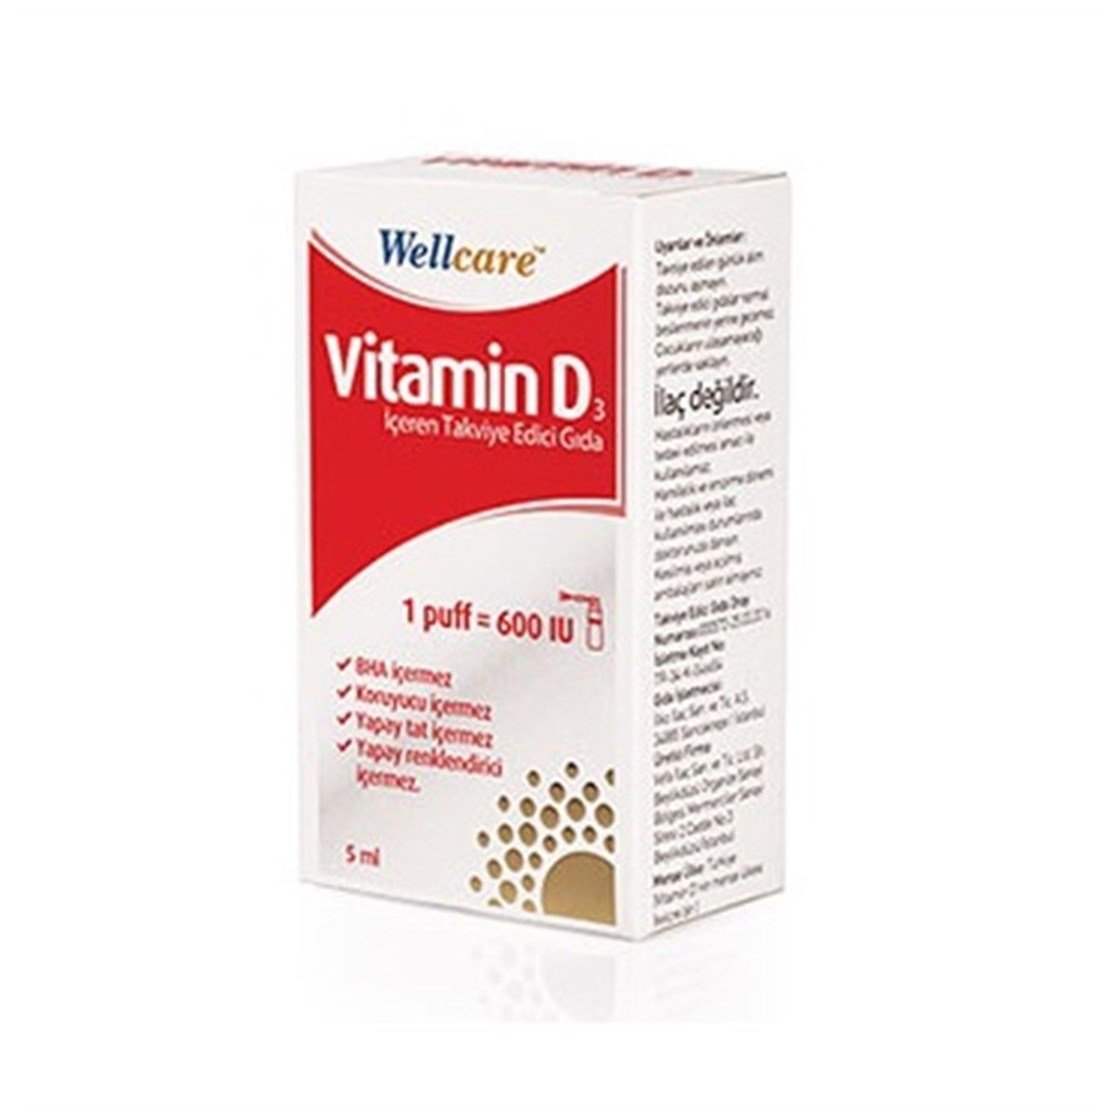 Wellcare Vitamin D3 600 IU 5 ml Sprey | www.texasspeakersbureau.com